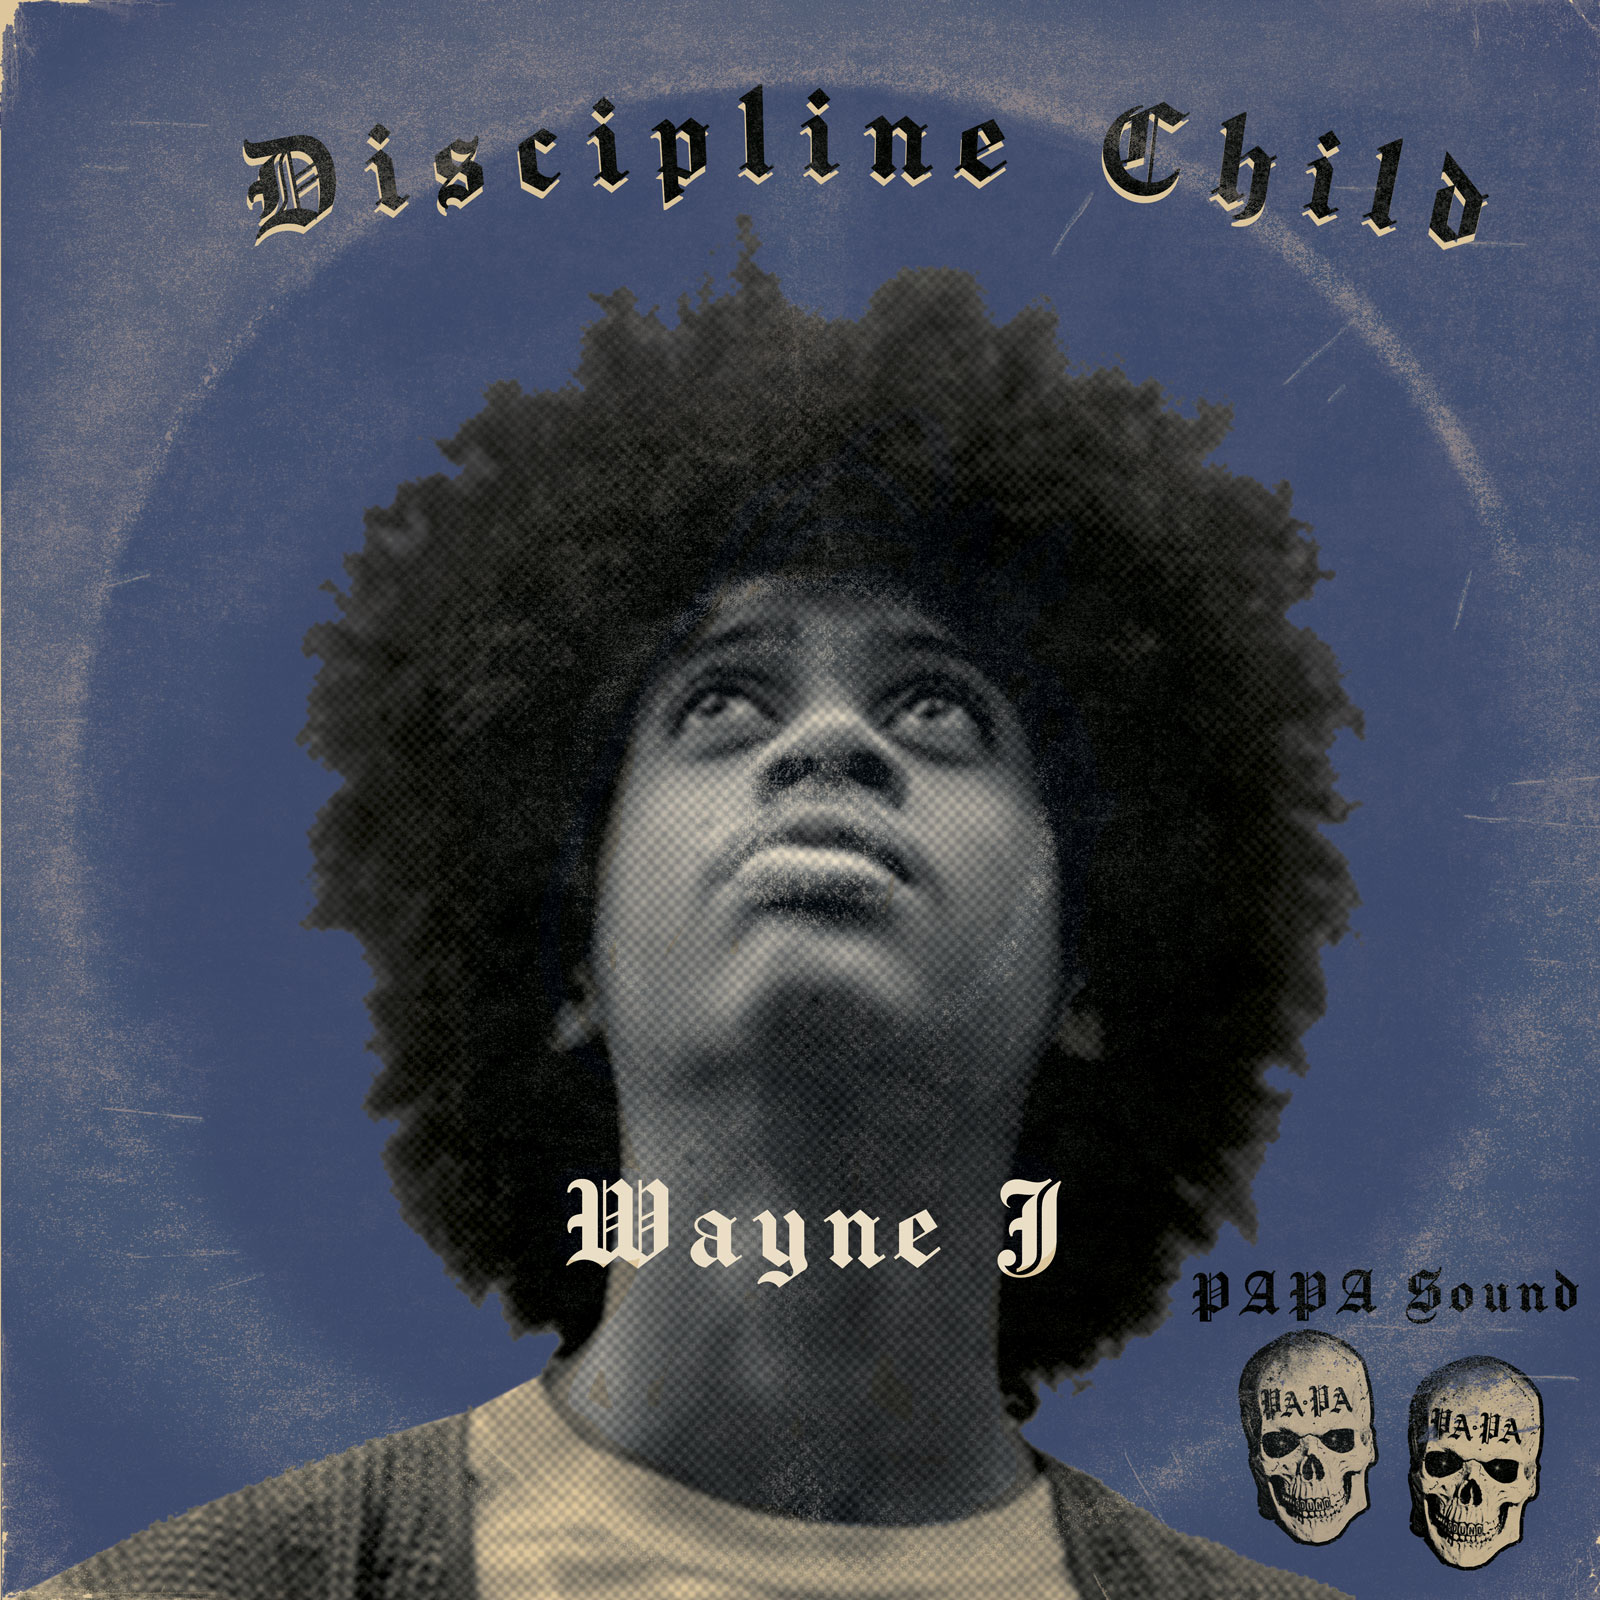 PAPA Sound x Wayne J - Discipline Child